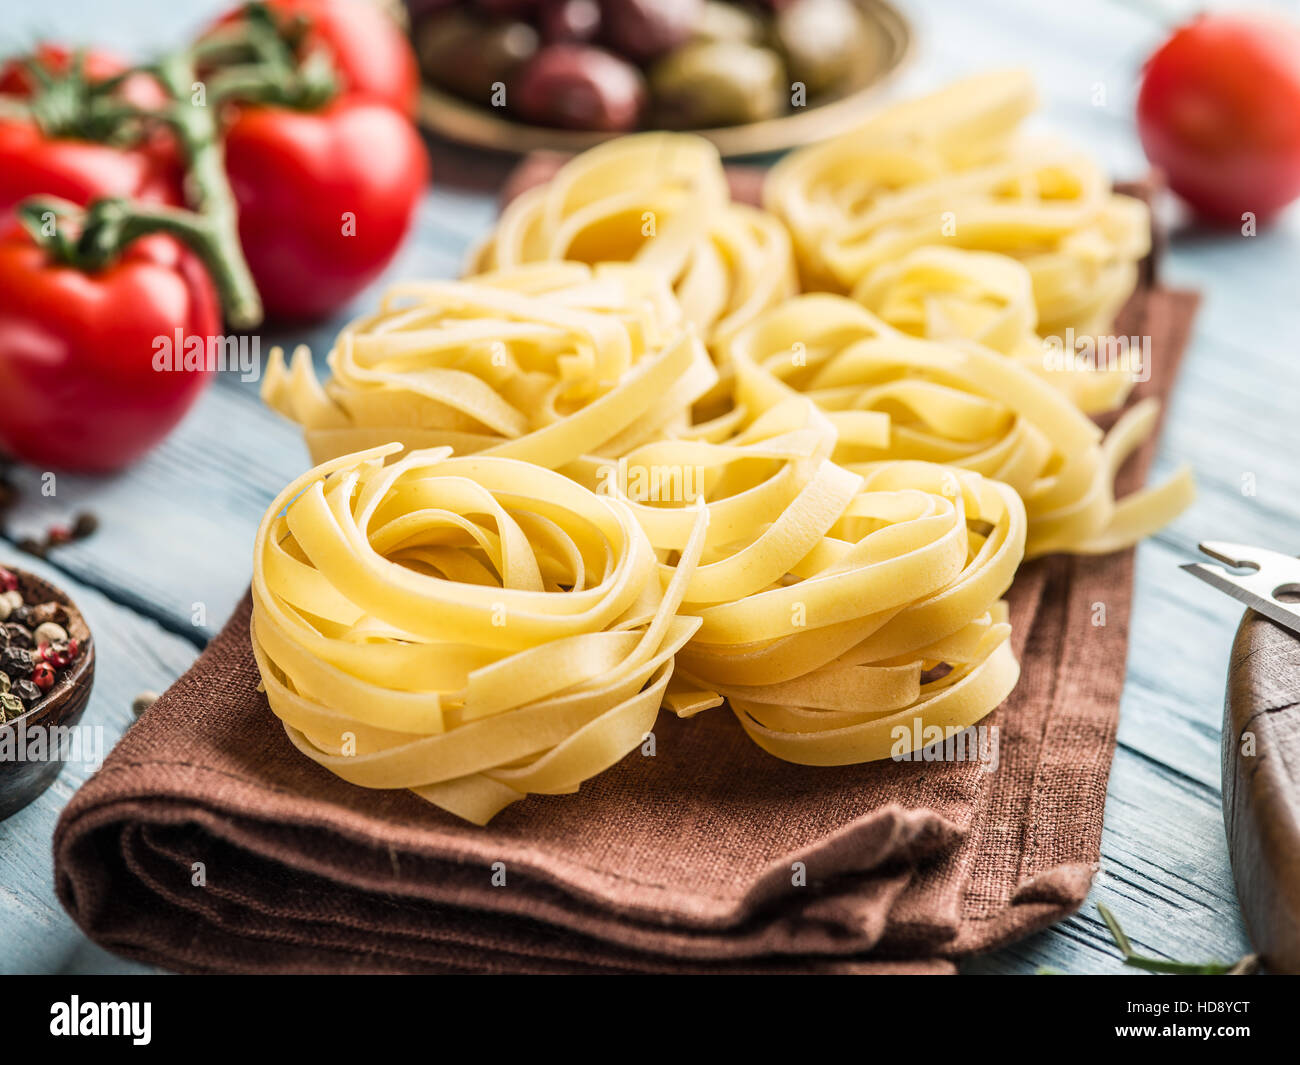 Pasta ingredientes. Tomates Cherry, spaghetti pasta y especias sobre la mesa de madera. Foto de stock